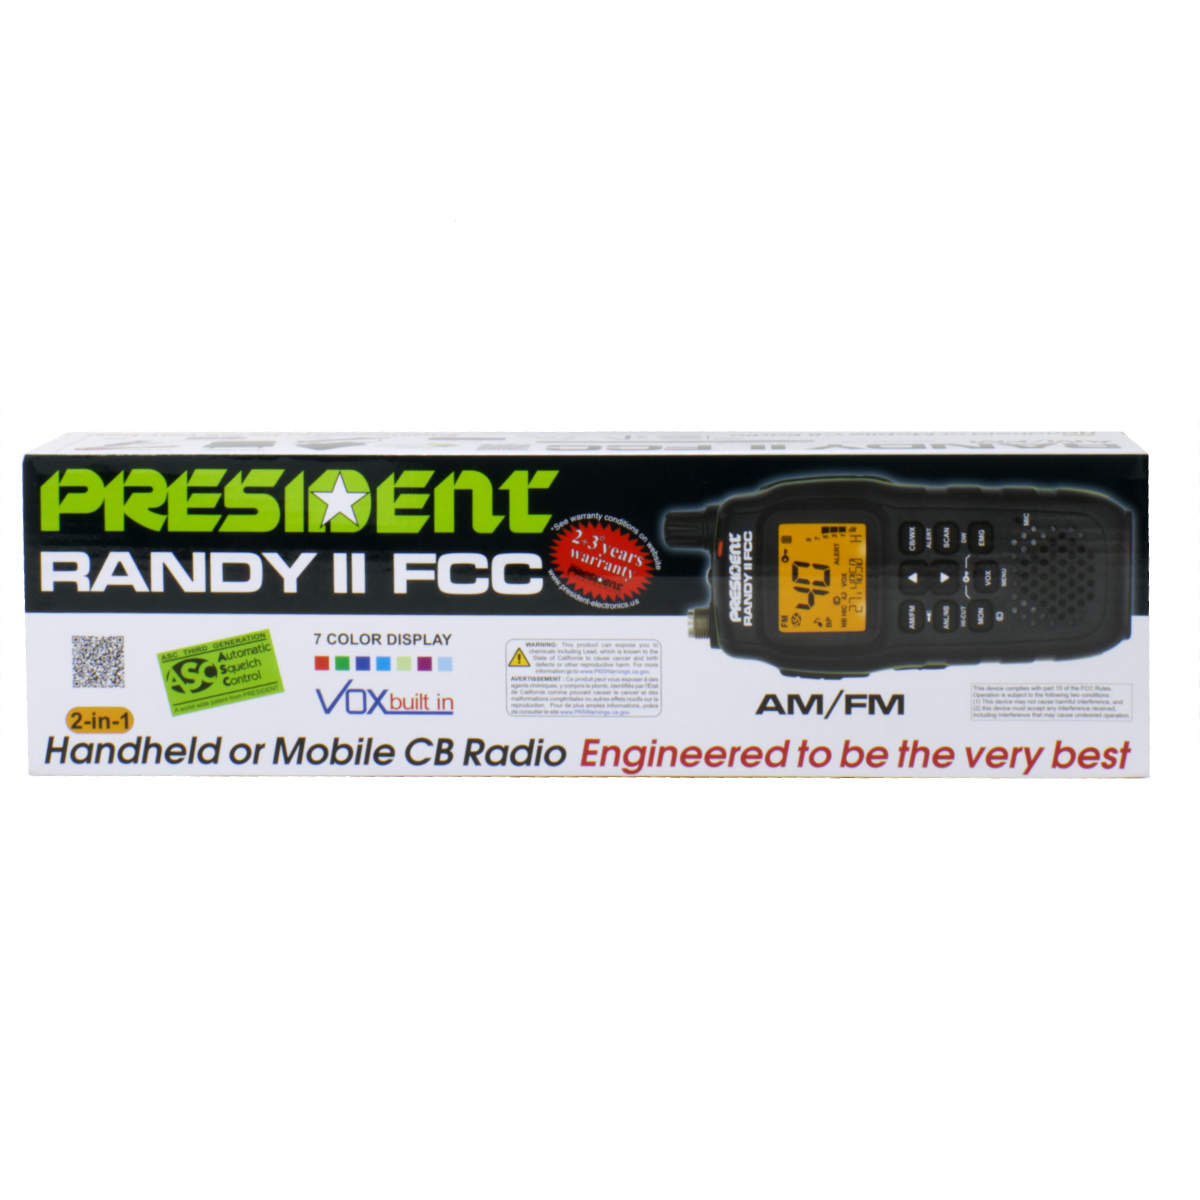 President Randy II AM/FM Handheld CB Radio